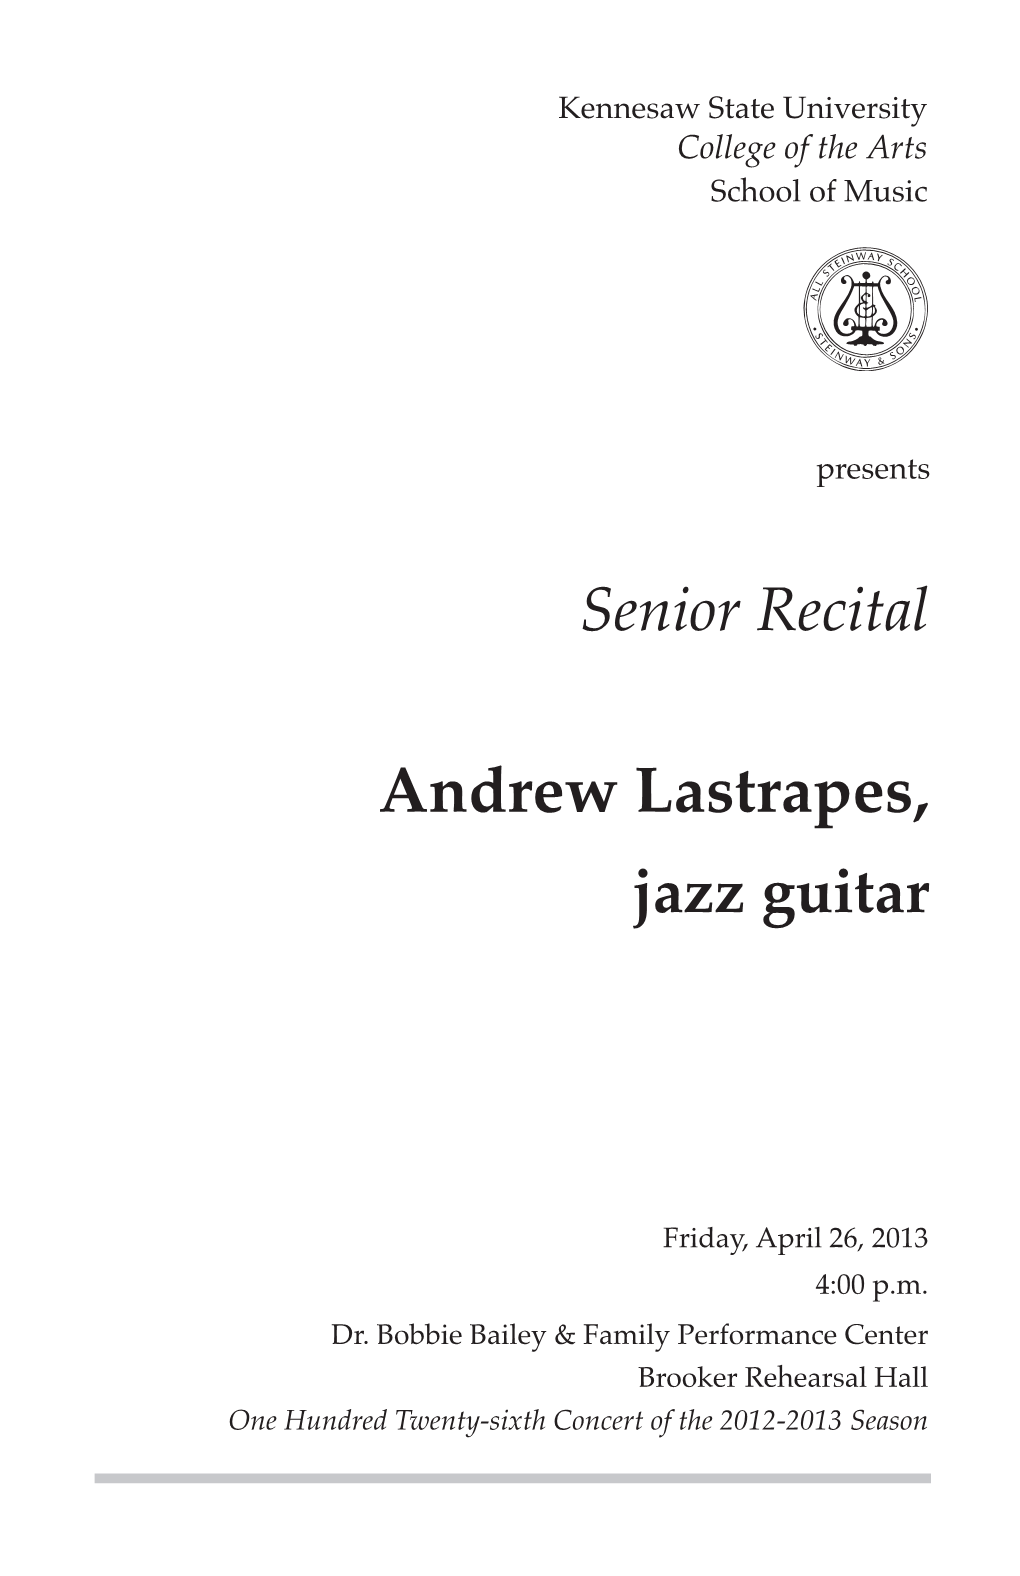 Senior Recital: Andrew Lastrapes, Jazz Guitar